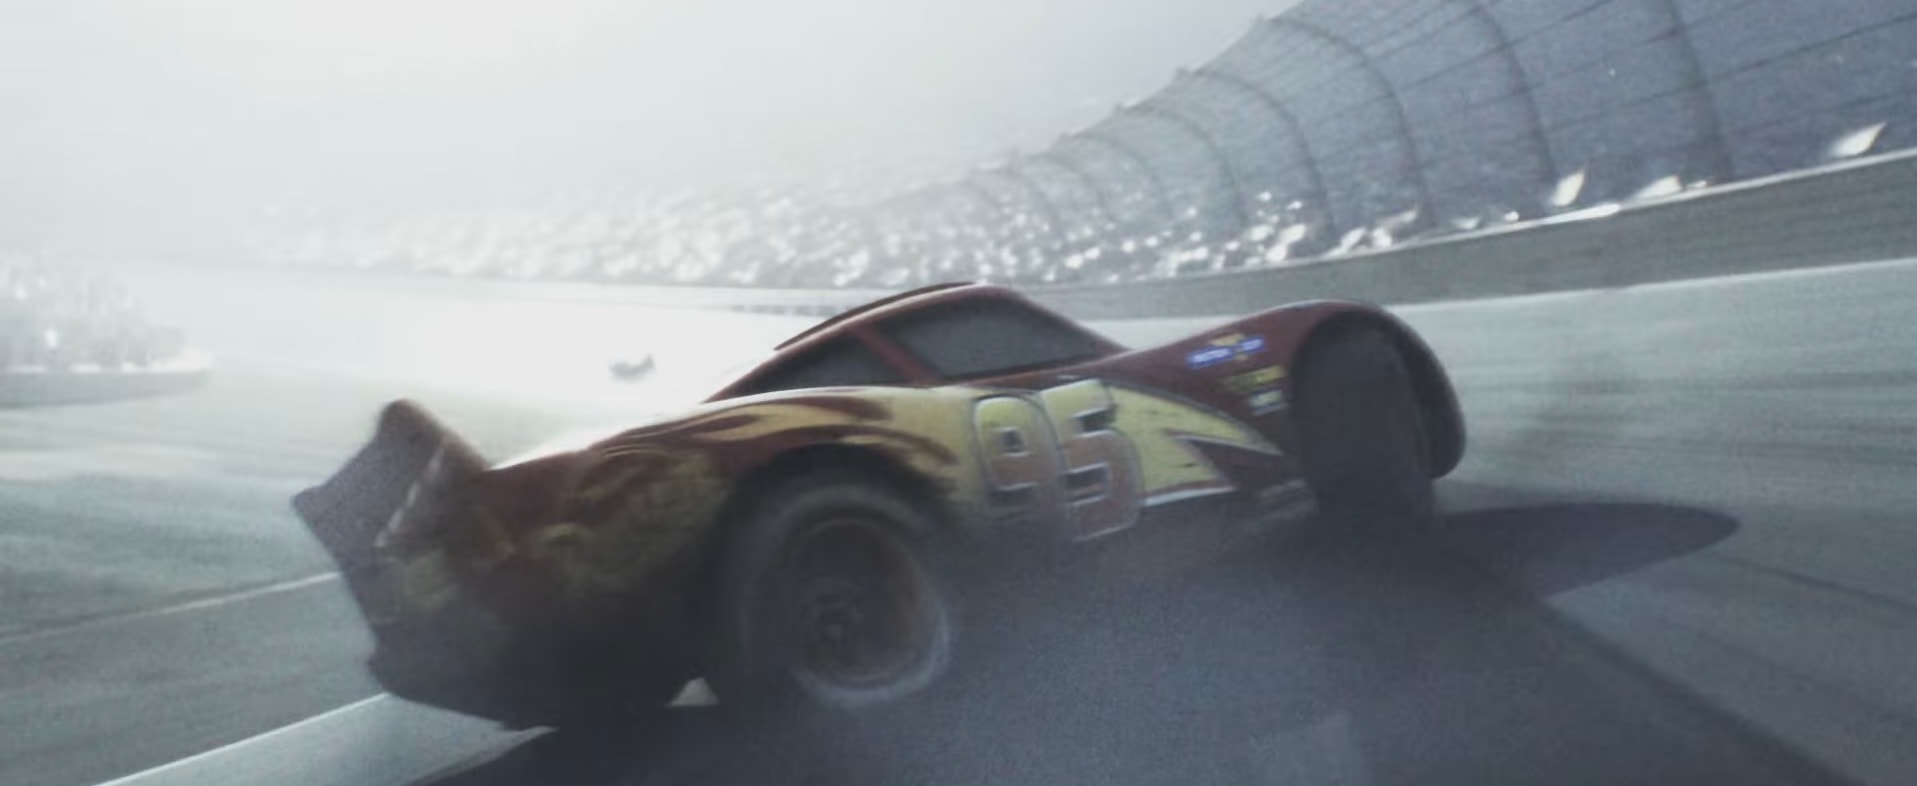 Cars 3 - McQueen's Crash 